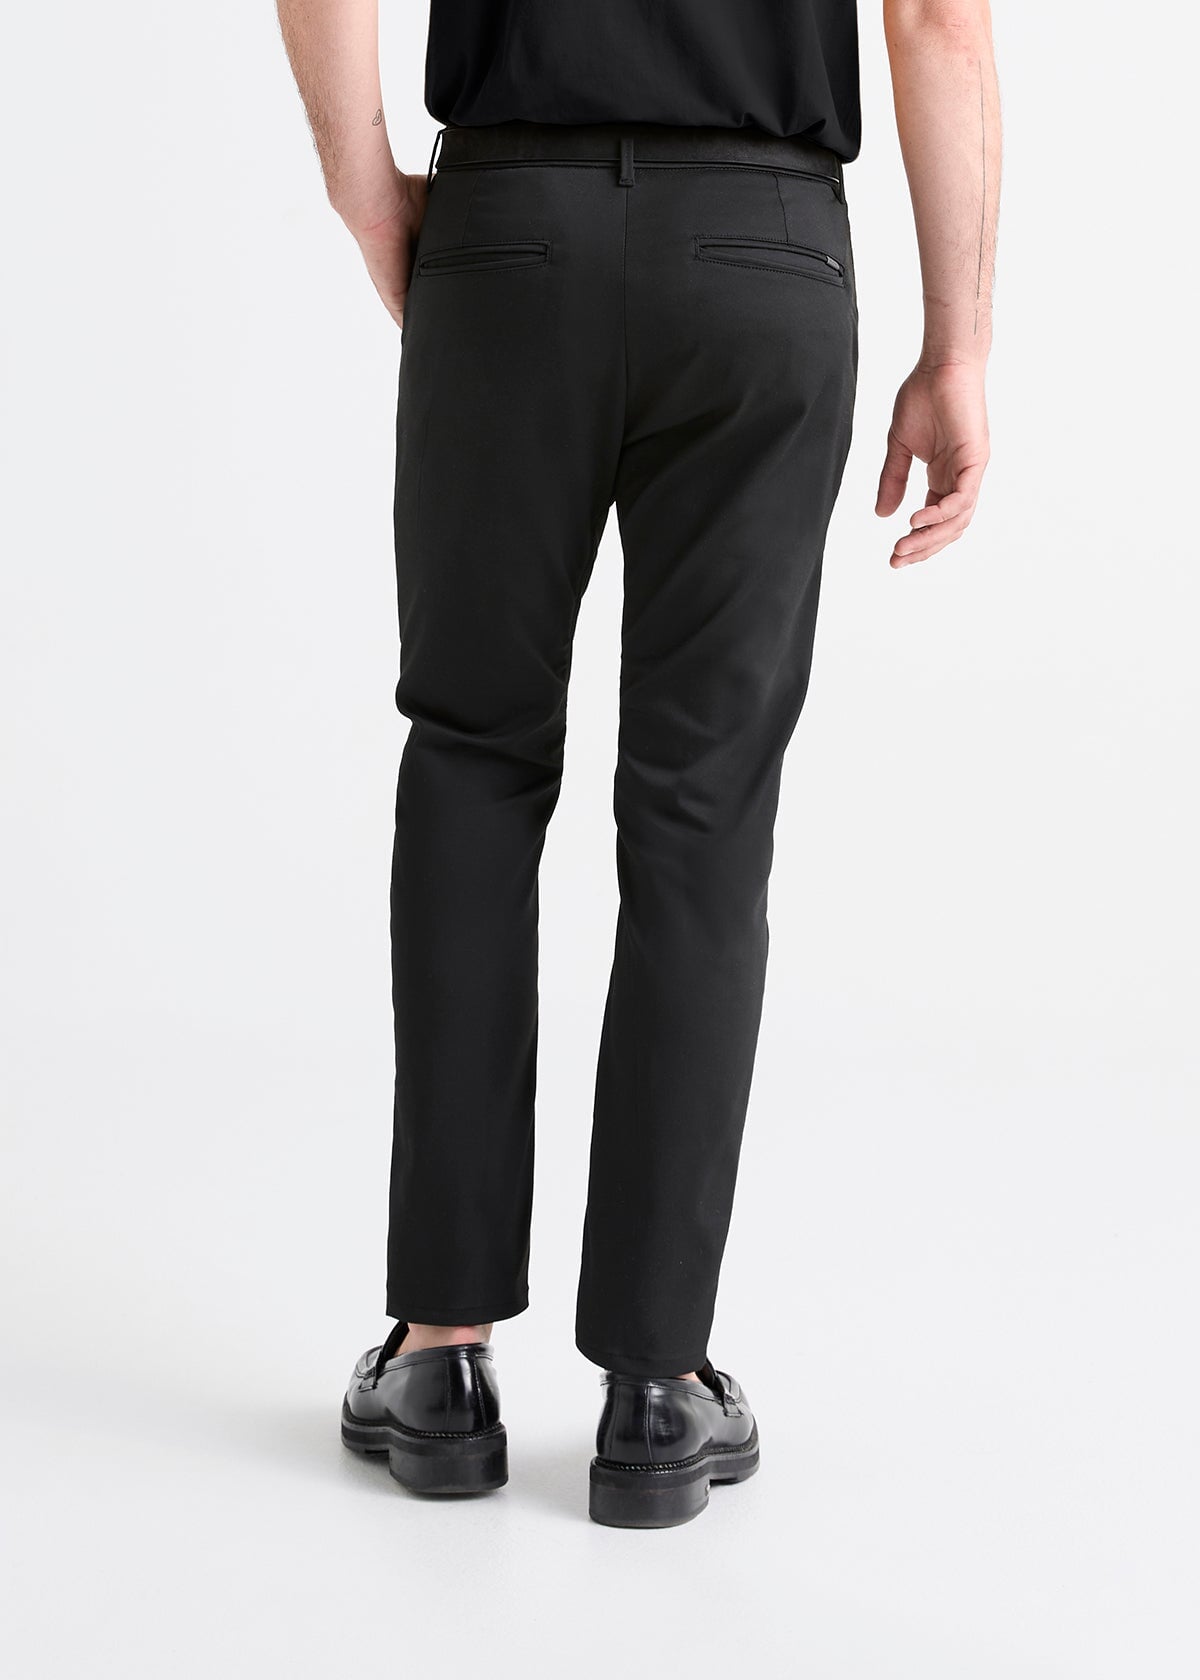 Classic Black Skinny Pants / Essential Stretch Slacks / Sleek Body Contour  Fit Pants